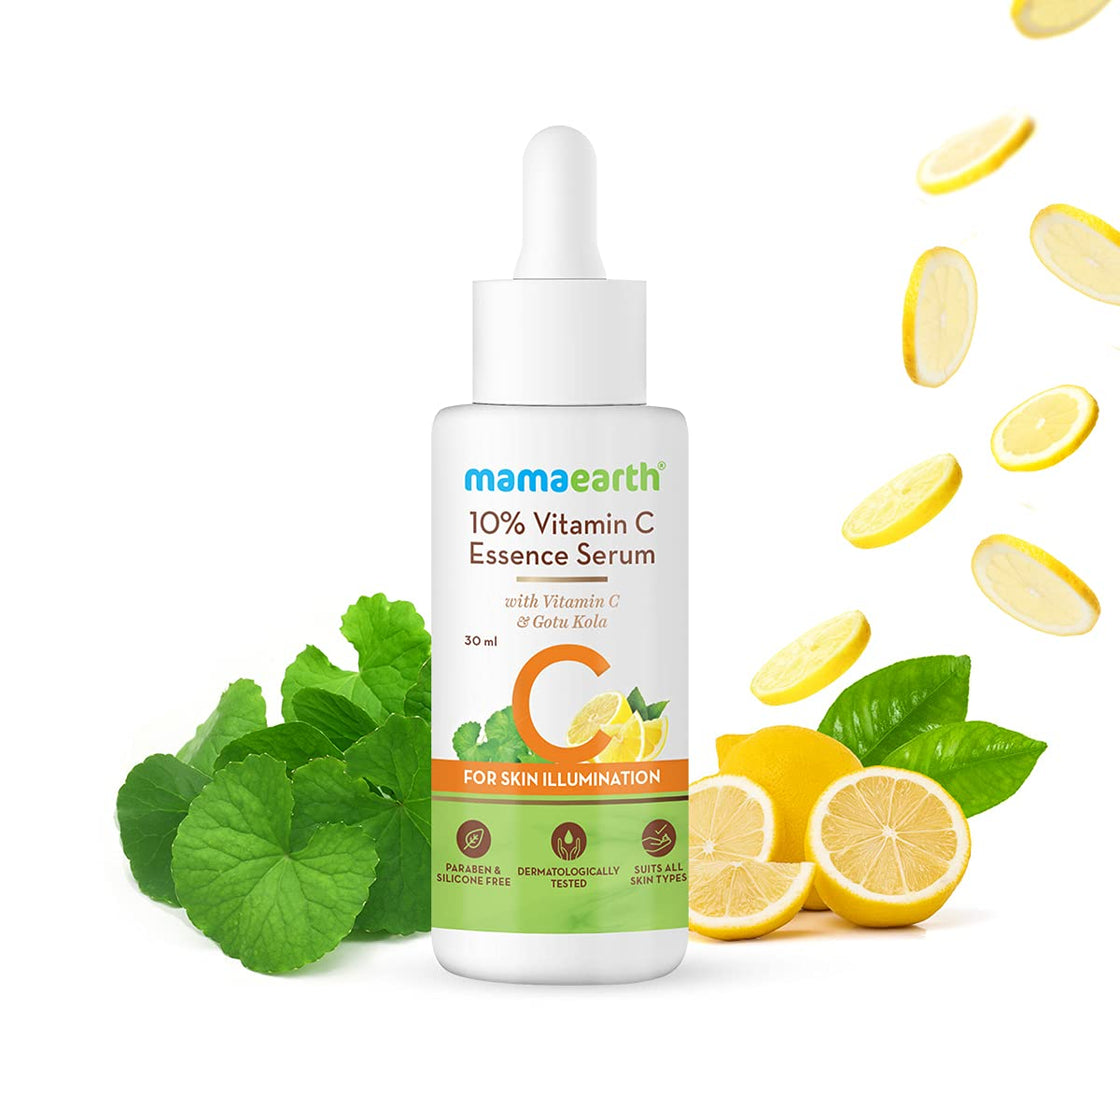 Mamaearth 10% Vitamin C Face Serum, Essence Serum With Vitamin C & Gotu Kola For Skin Illumination-2